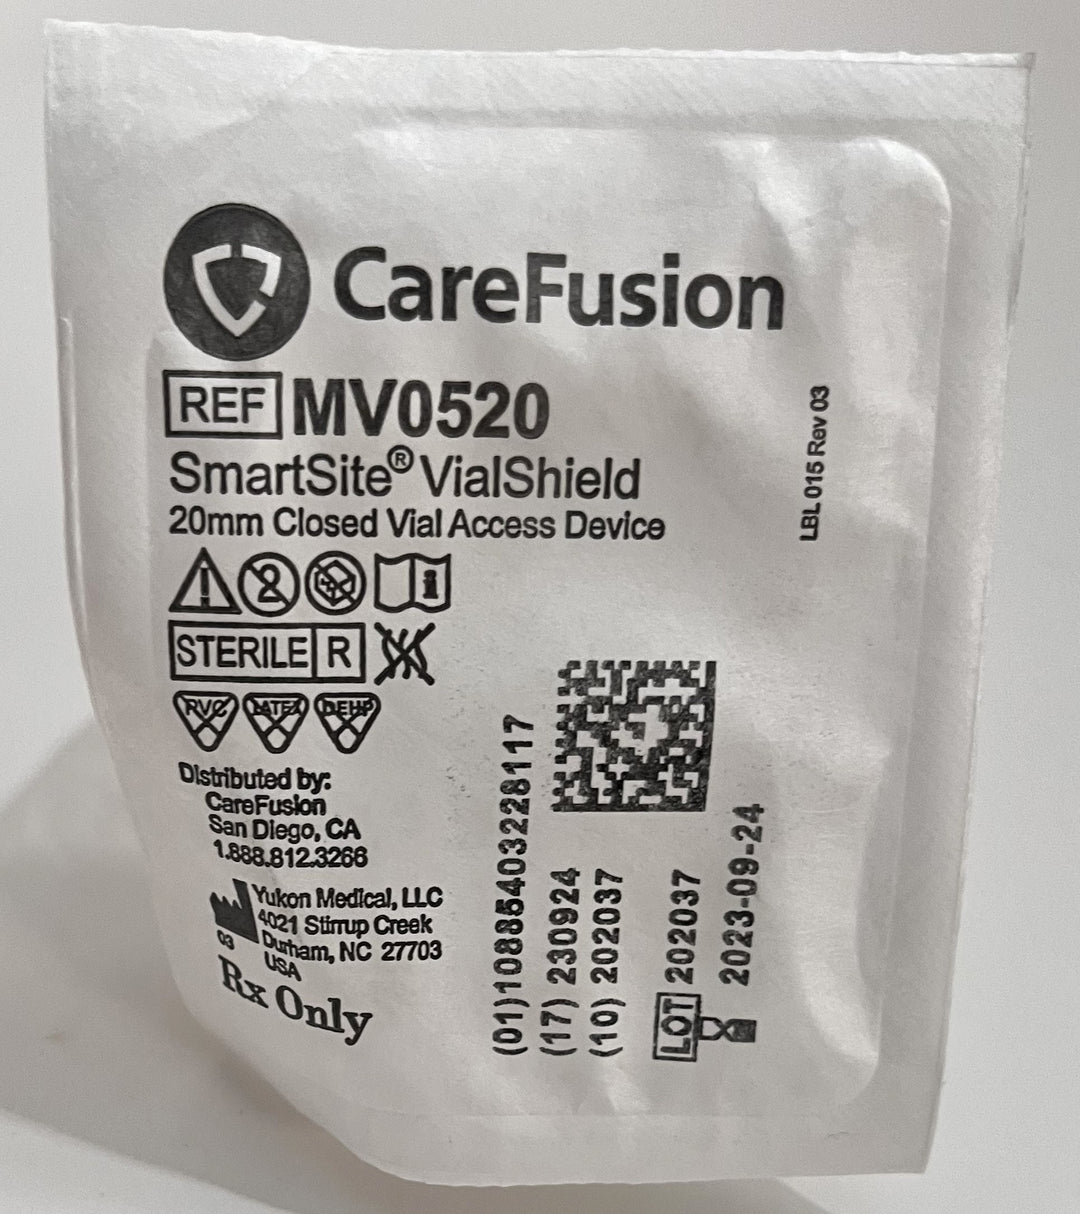 CareFusion MV0520 SmartSite VialShield 20mm Closed Vial Access Device